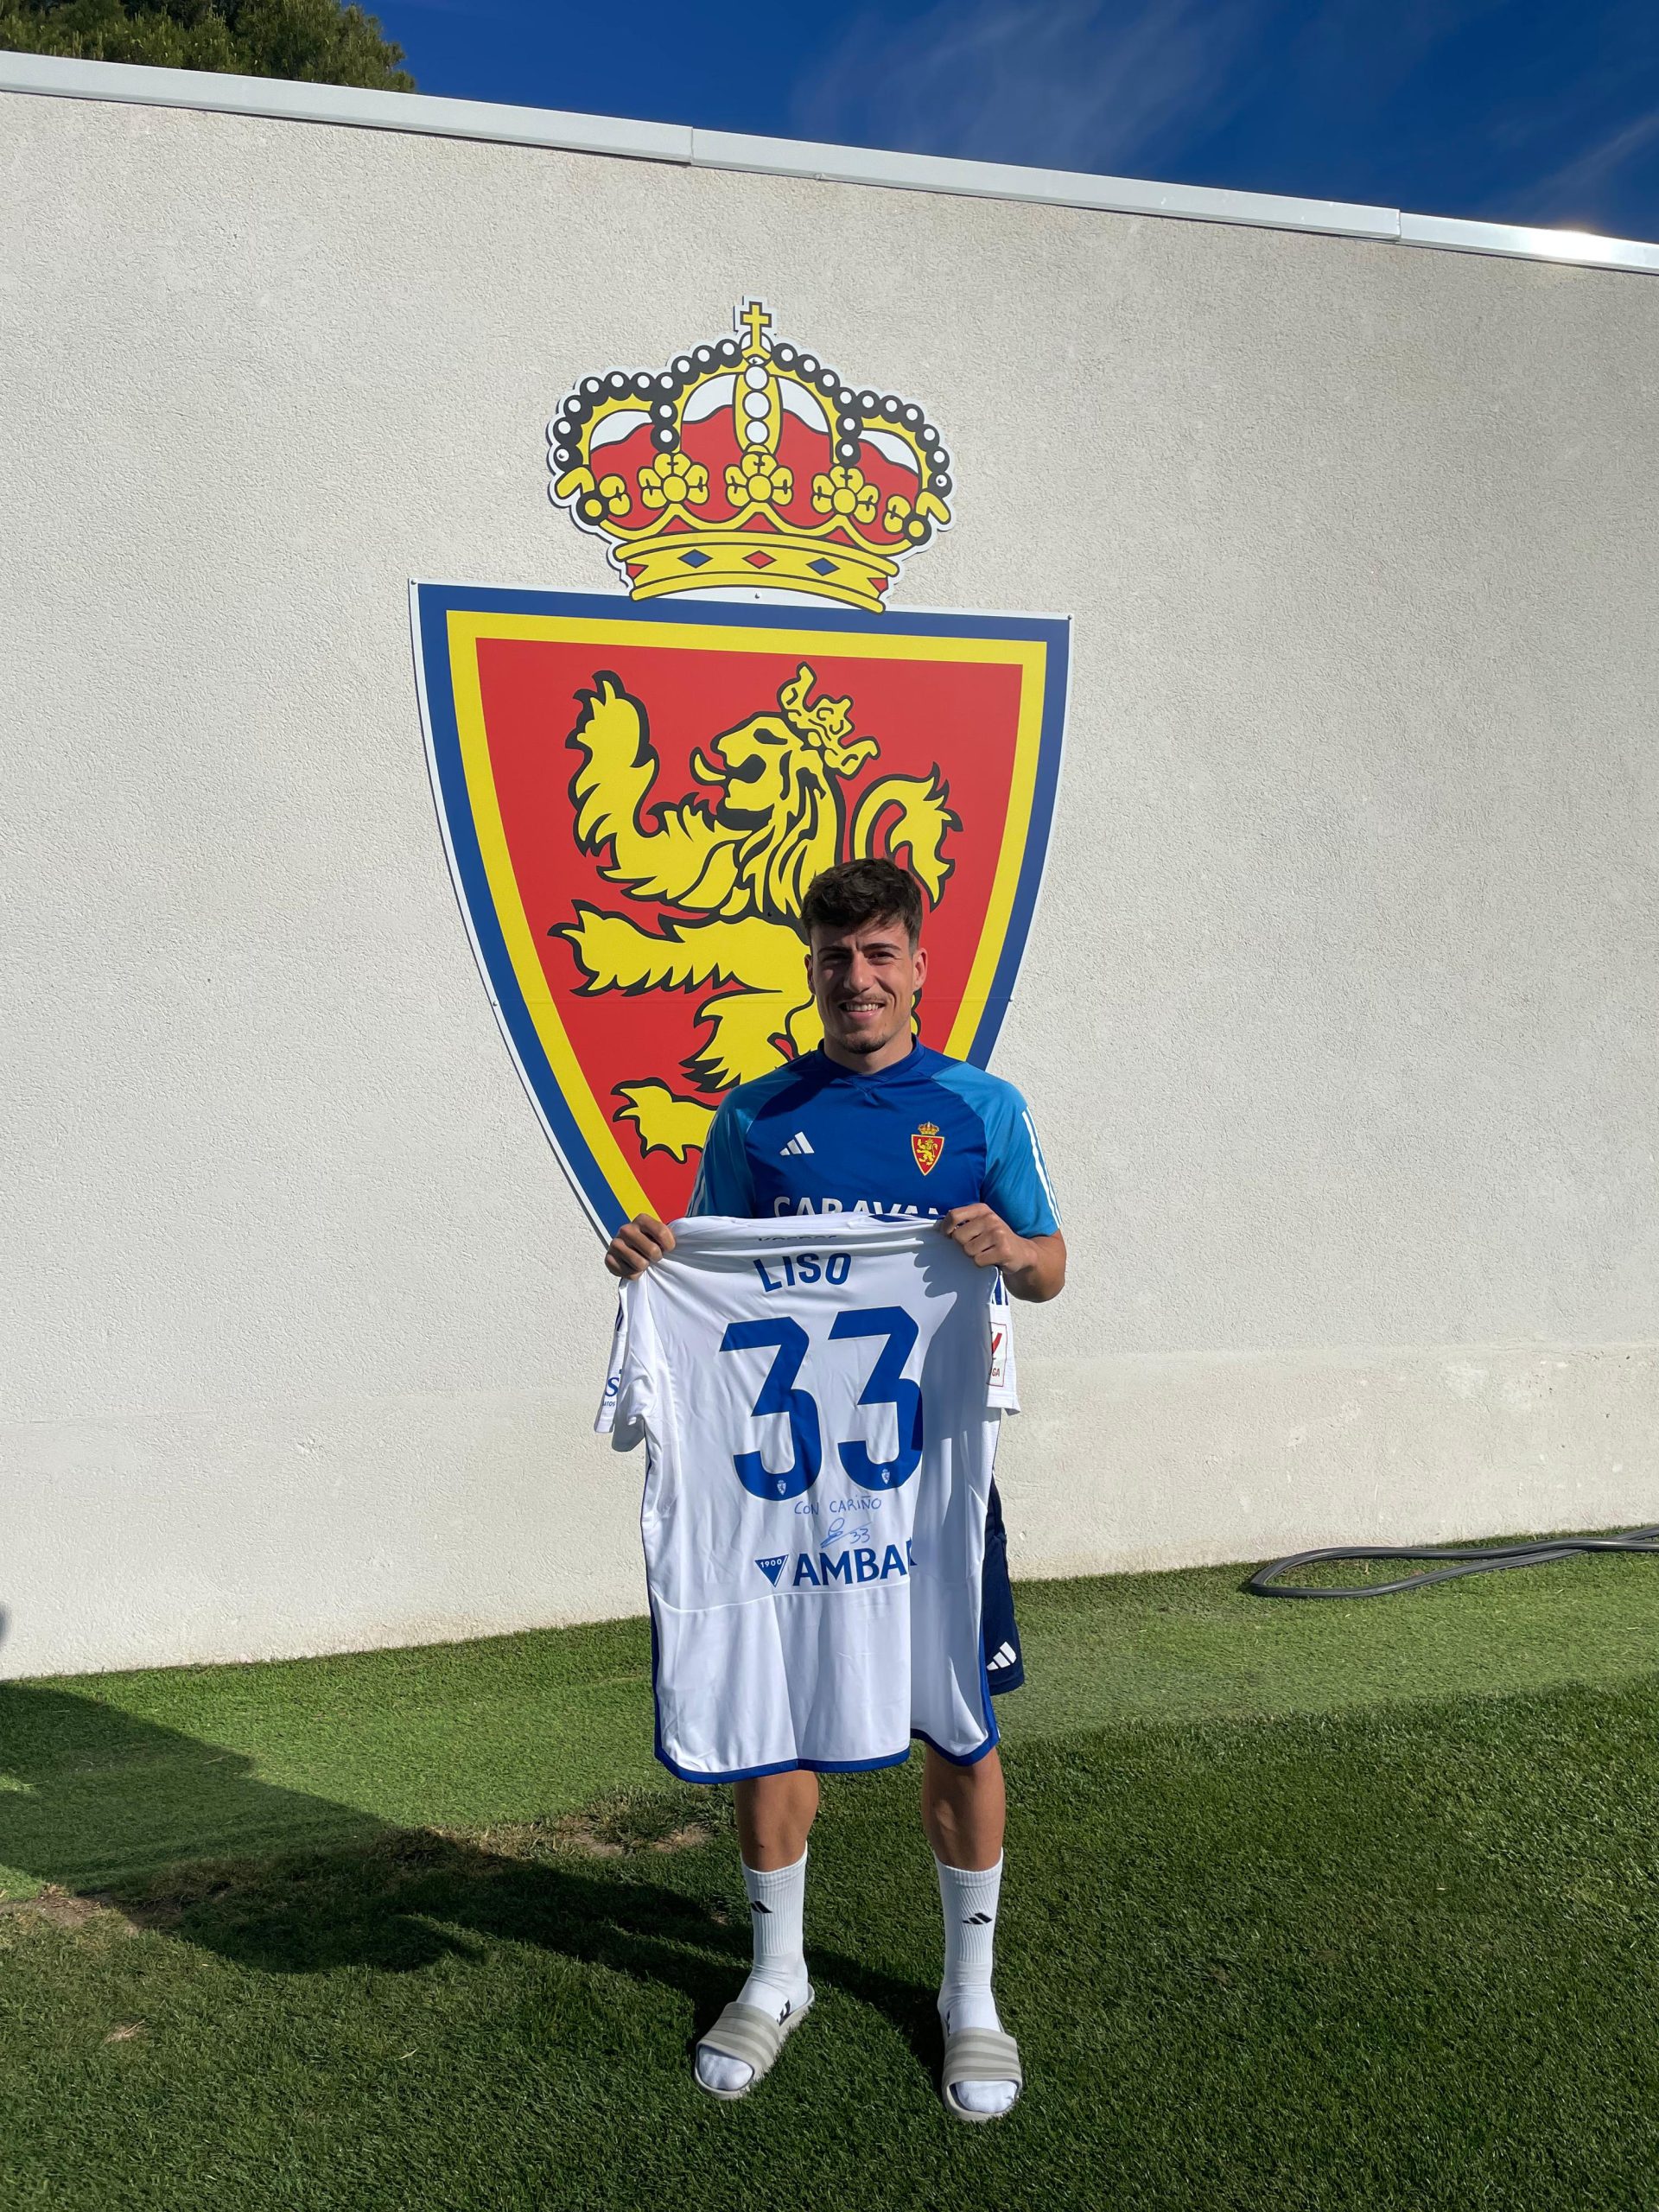 Adrián Liso Real Zaragoza